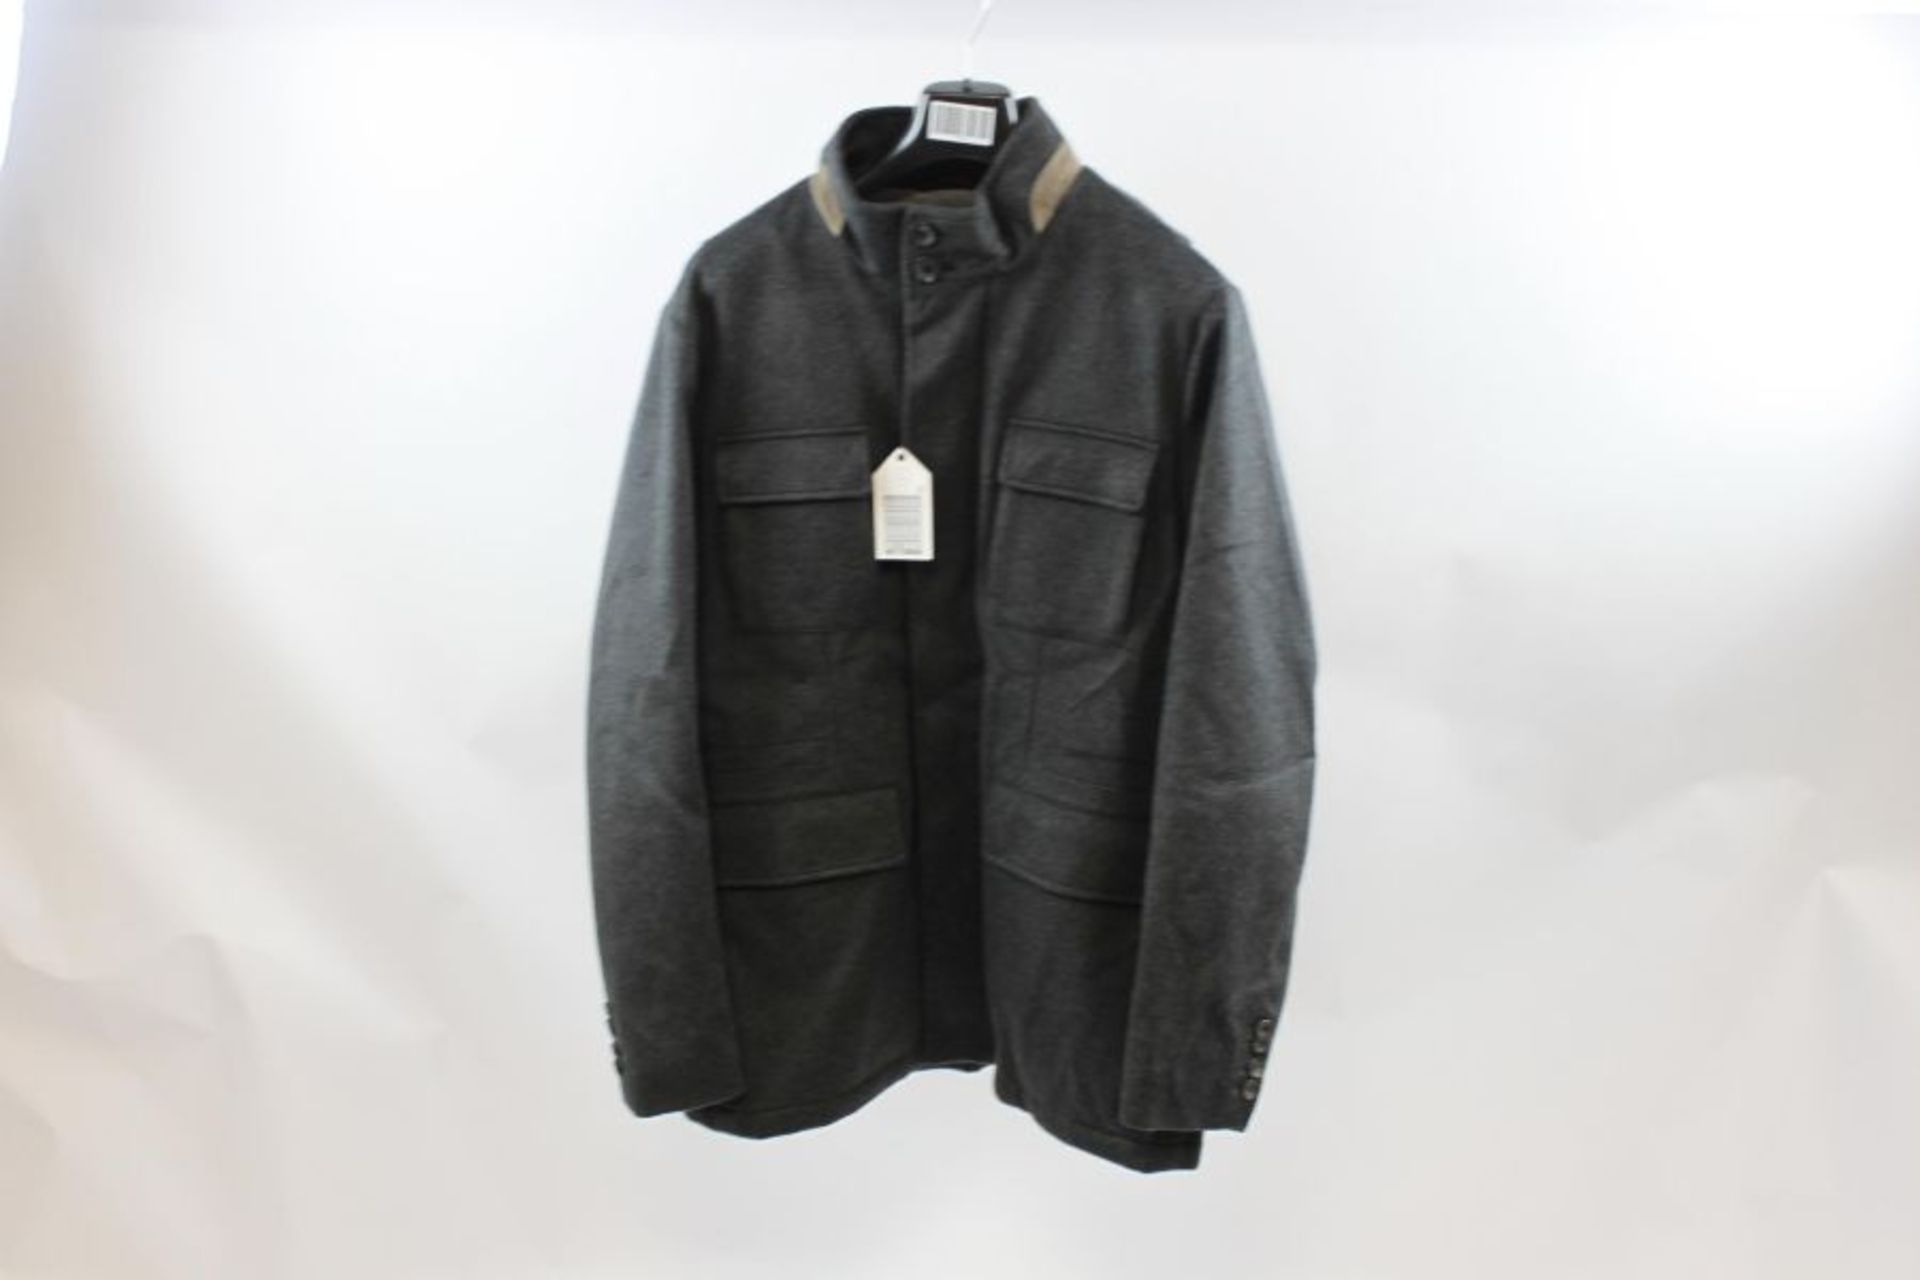 Hackett No 14 Men's Cashmere Field Jacket, Charcoal, Size XXL - Image 3 of 3